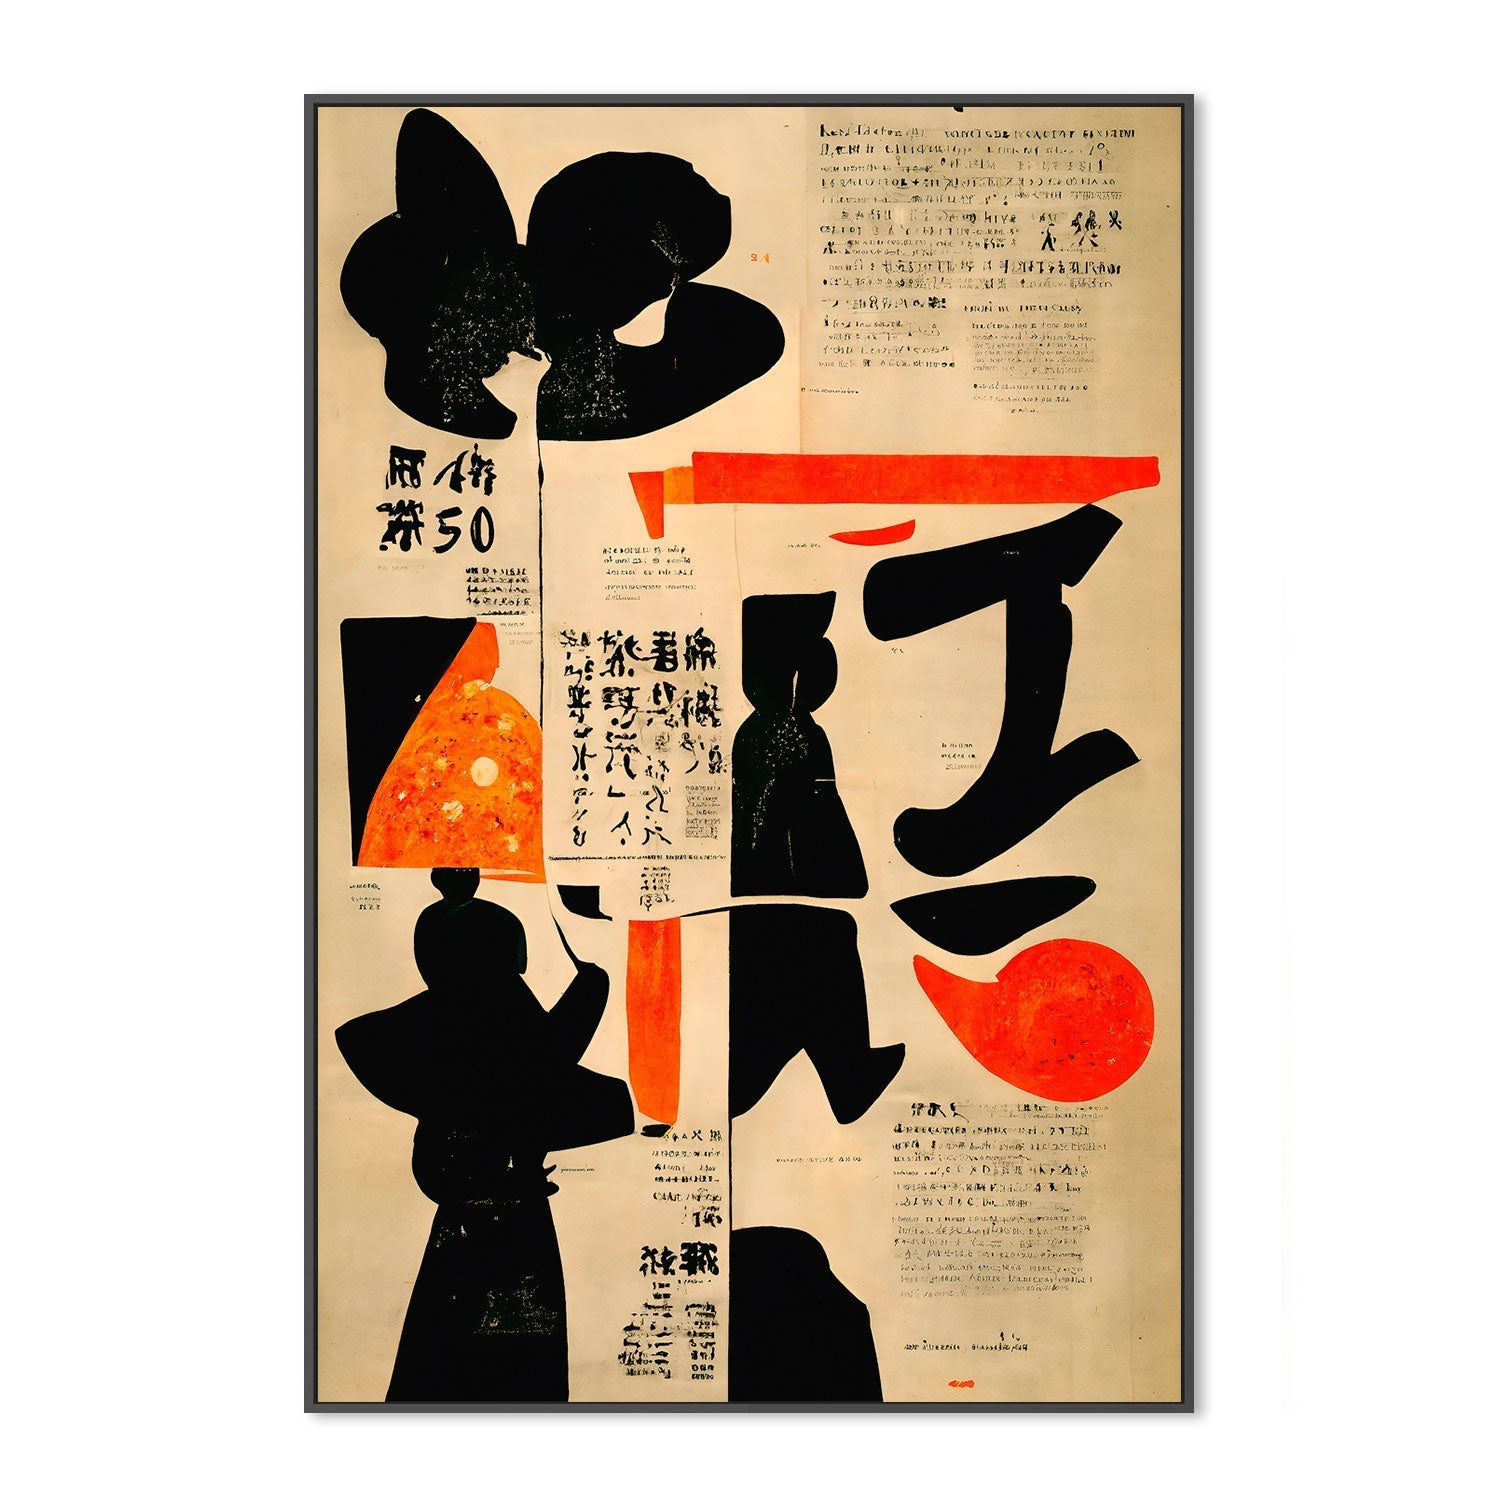 wall-art-print-canvas-poster-framed-Kiokio Poster , By Treechild-GIOIA-WALL-ART